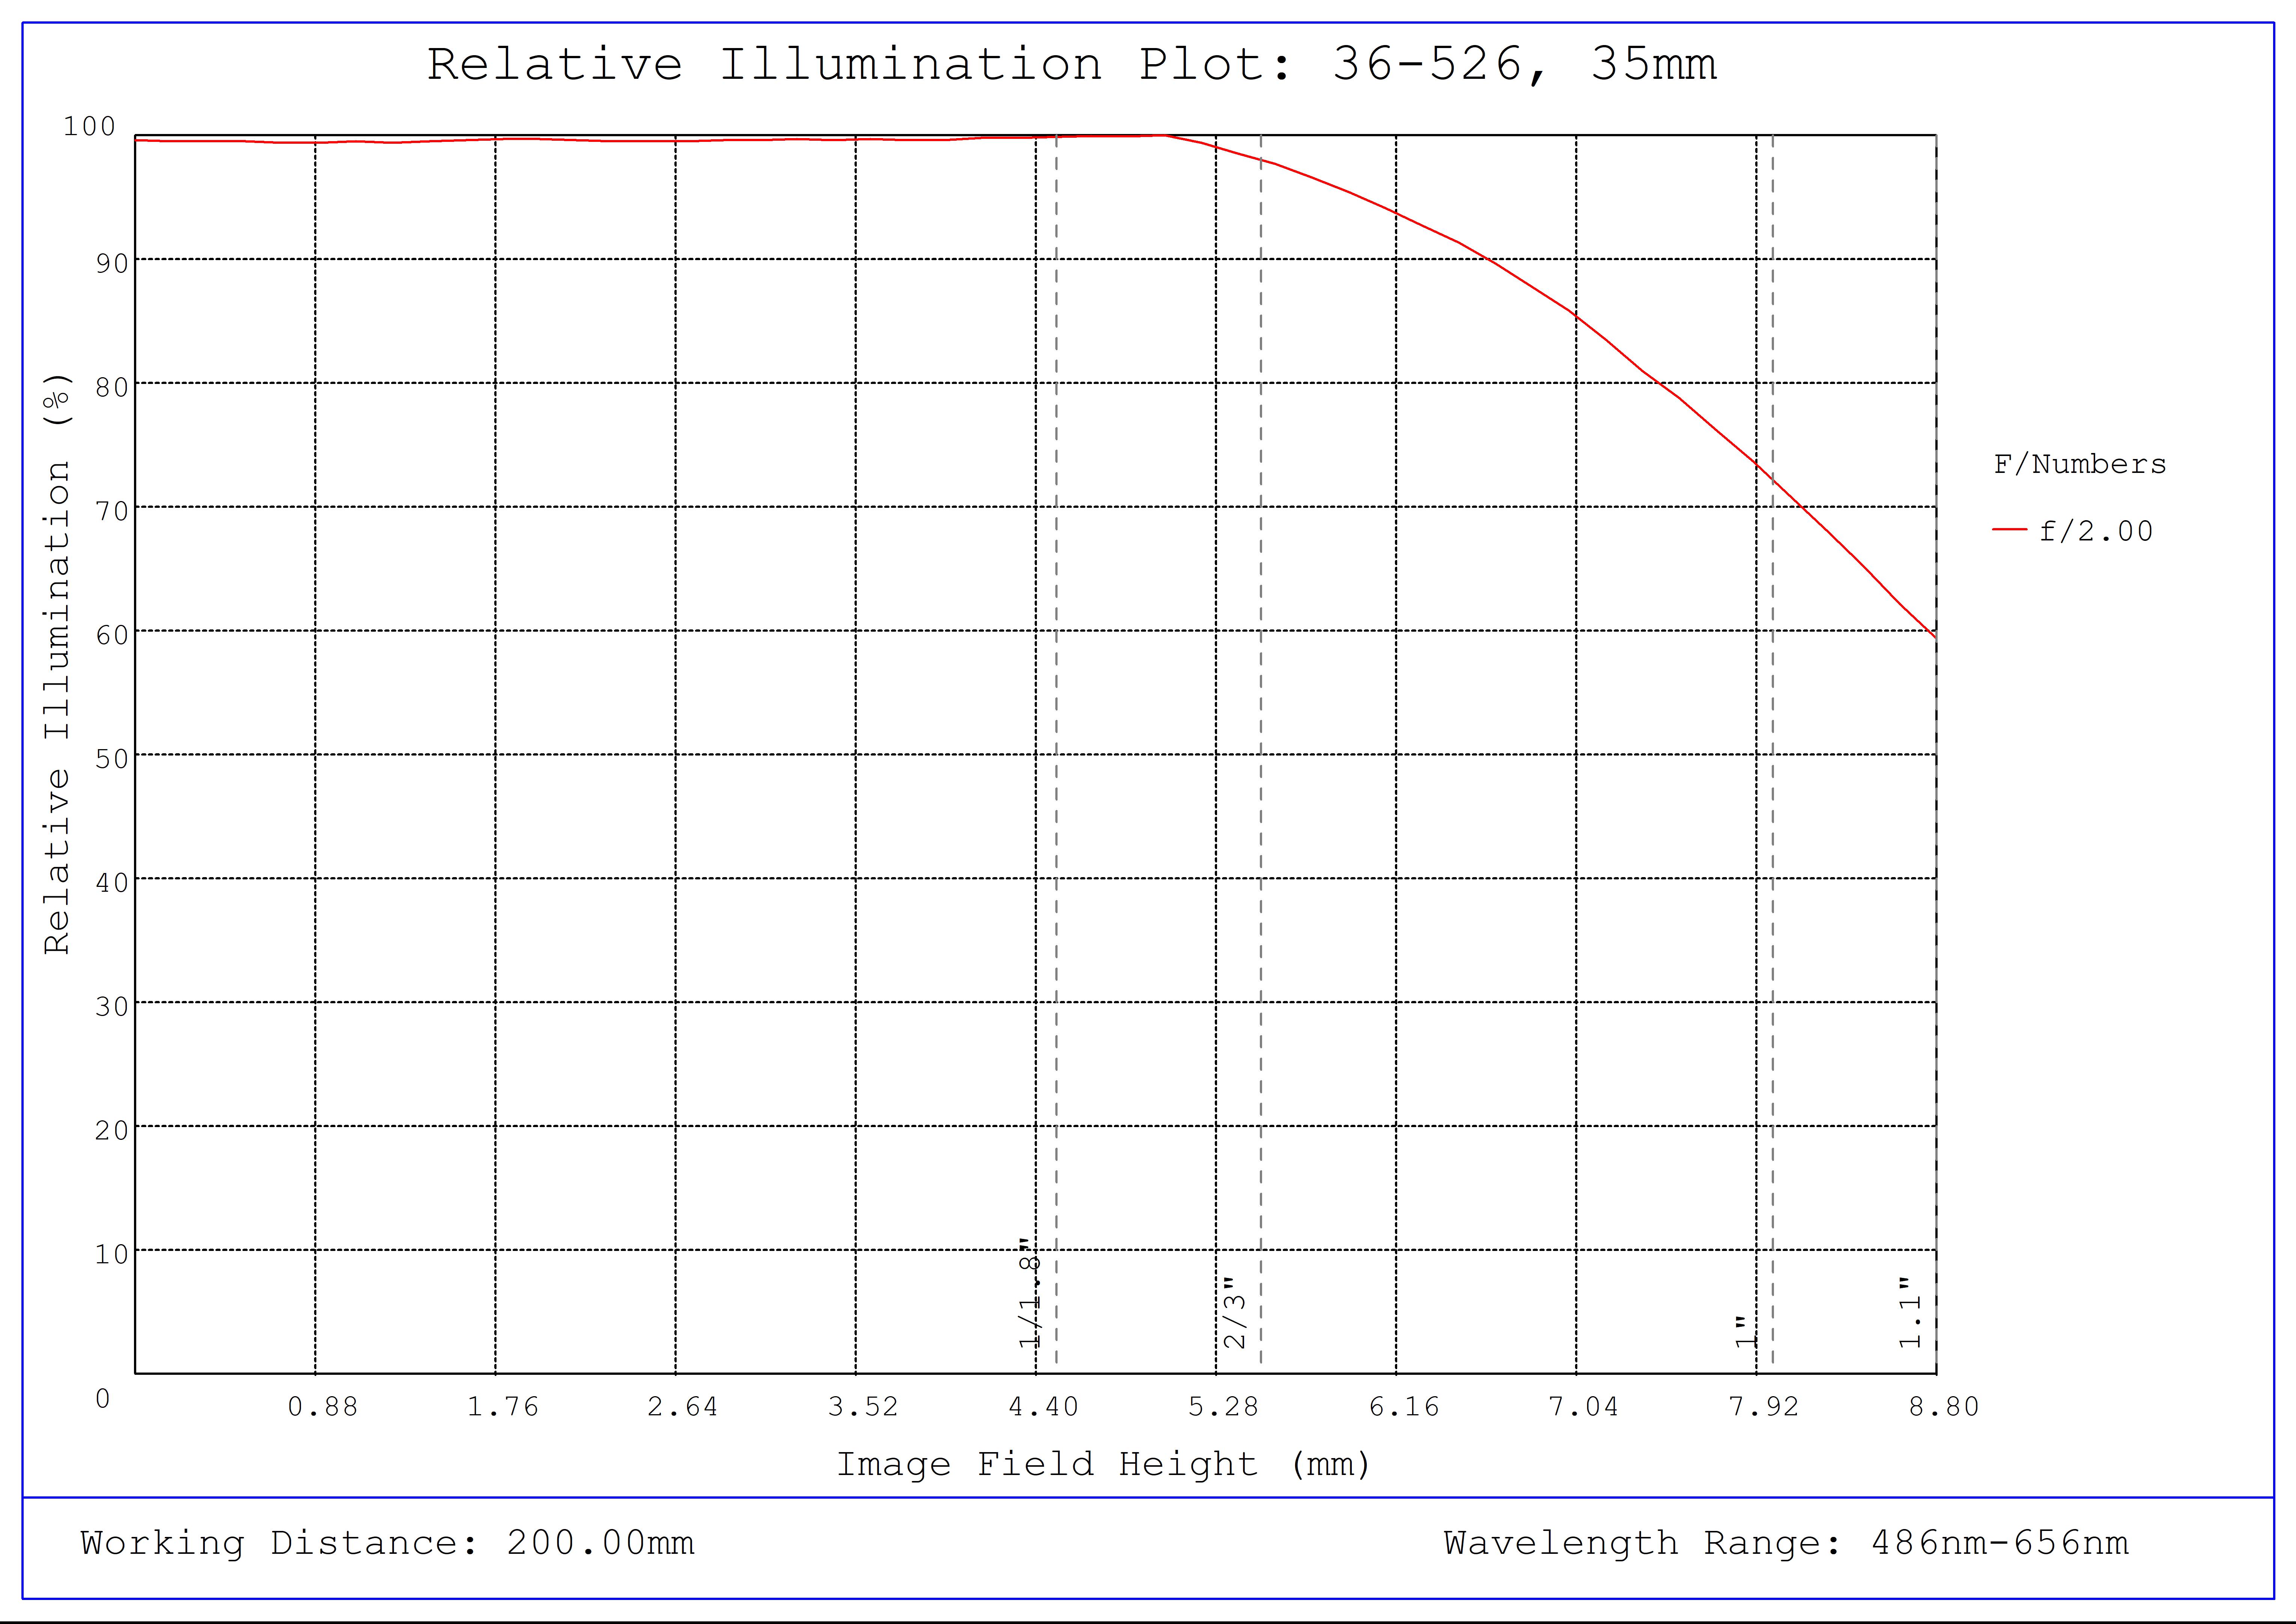 #36-526, 35mm f/2.0, HPr Series Fixed Focal Length Lens, Relative Illumination Plot